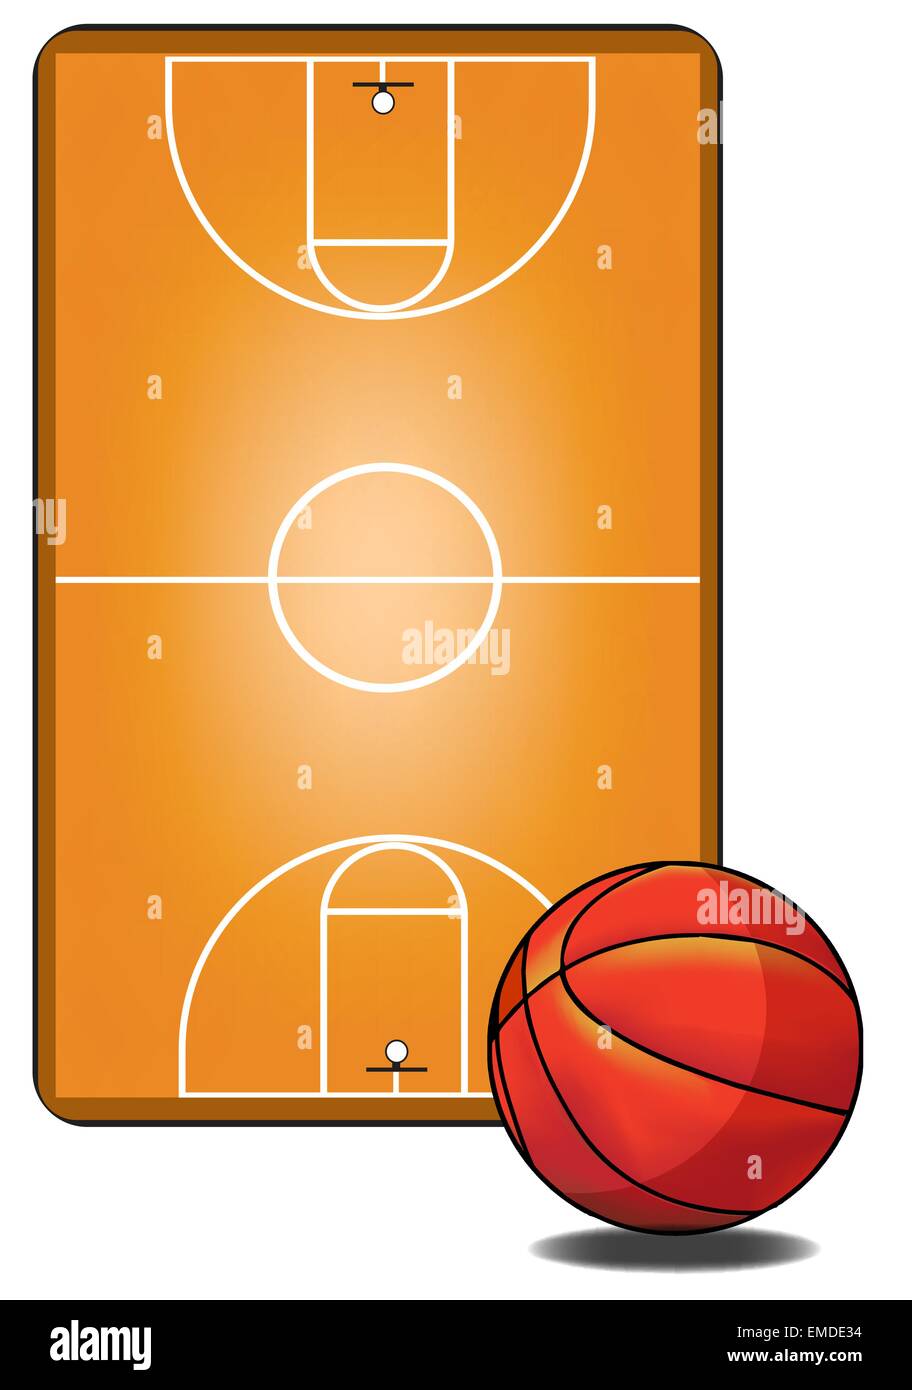 basketball field Stock Vector